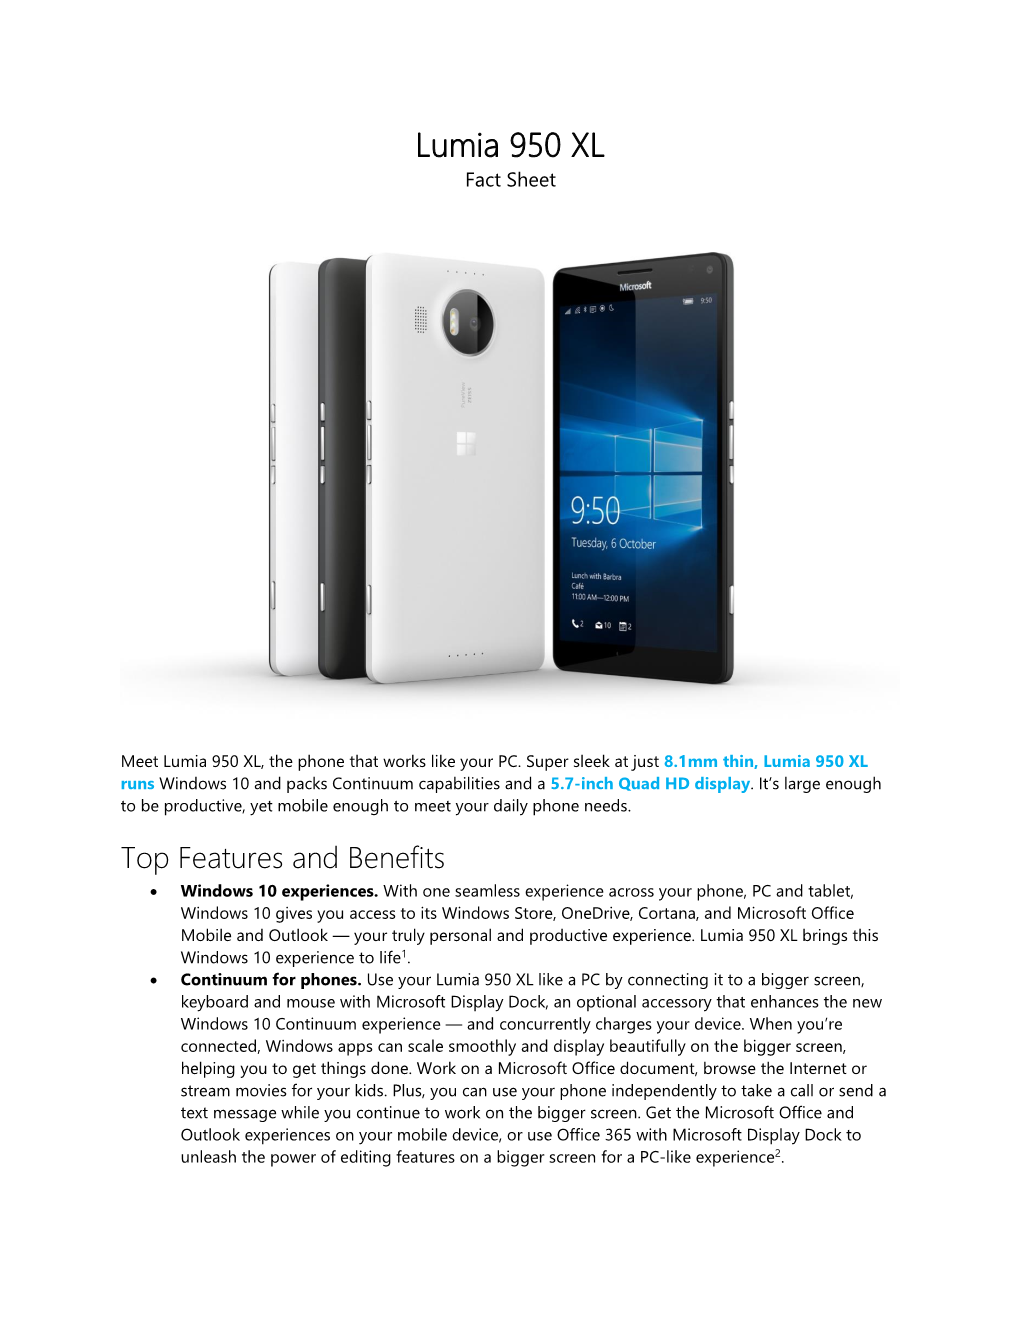 Lumia 950 XL Fact Sheet